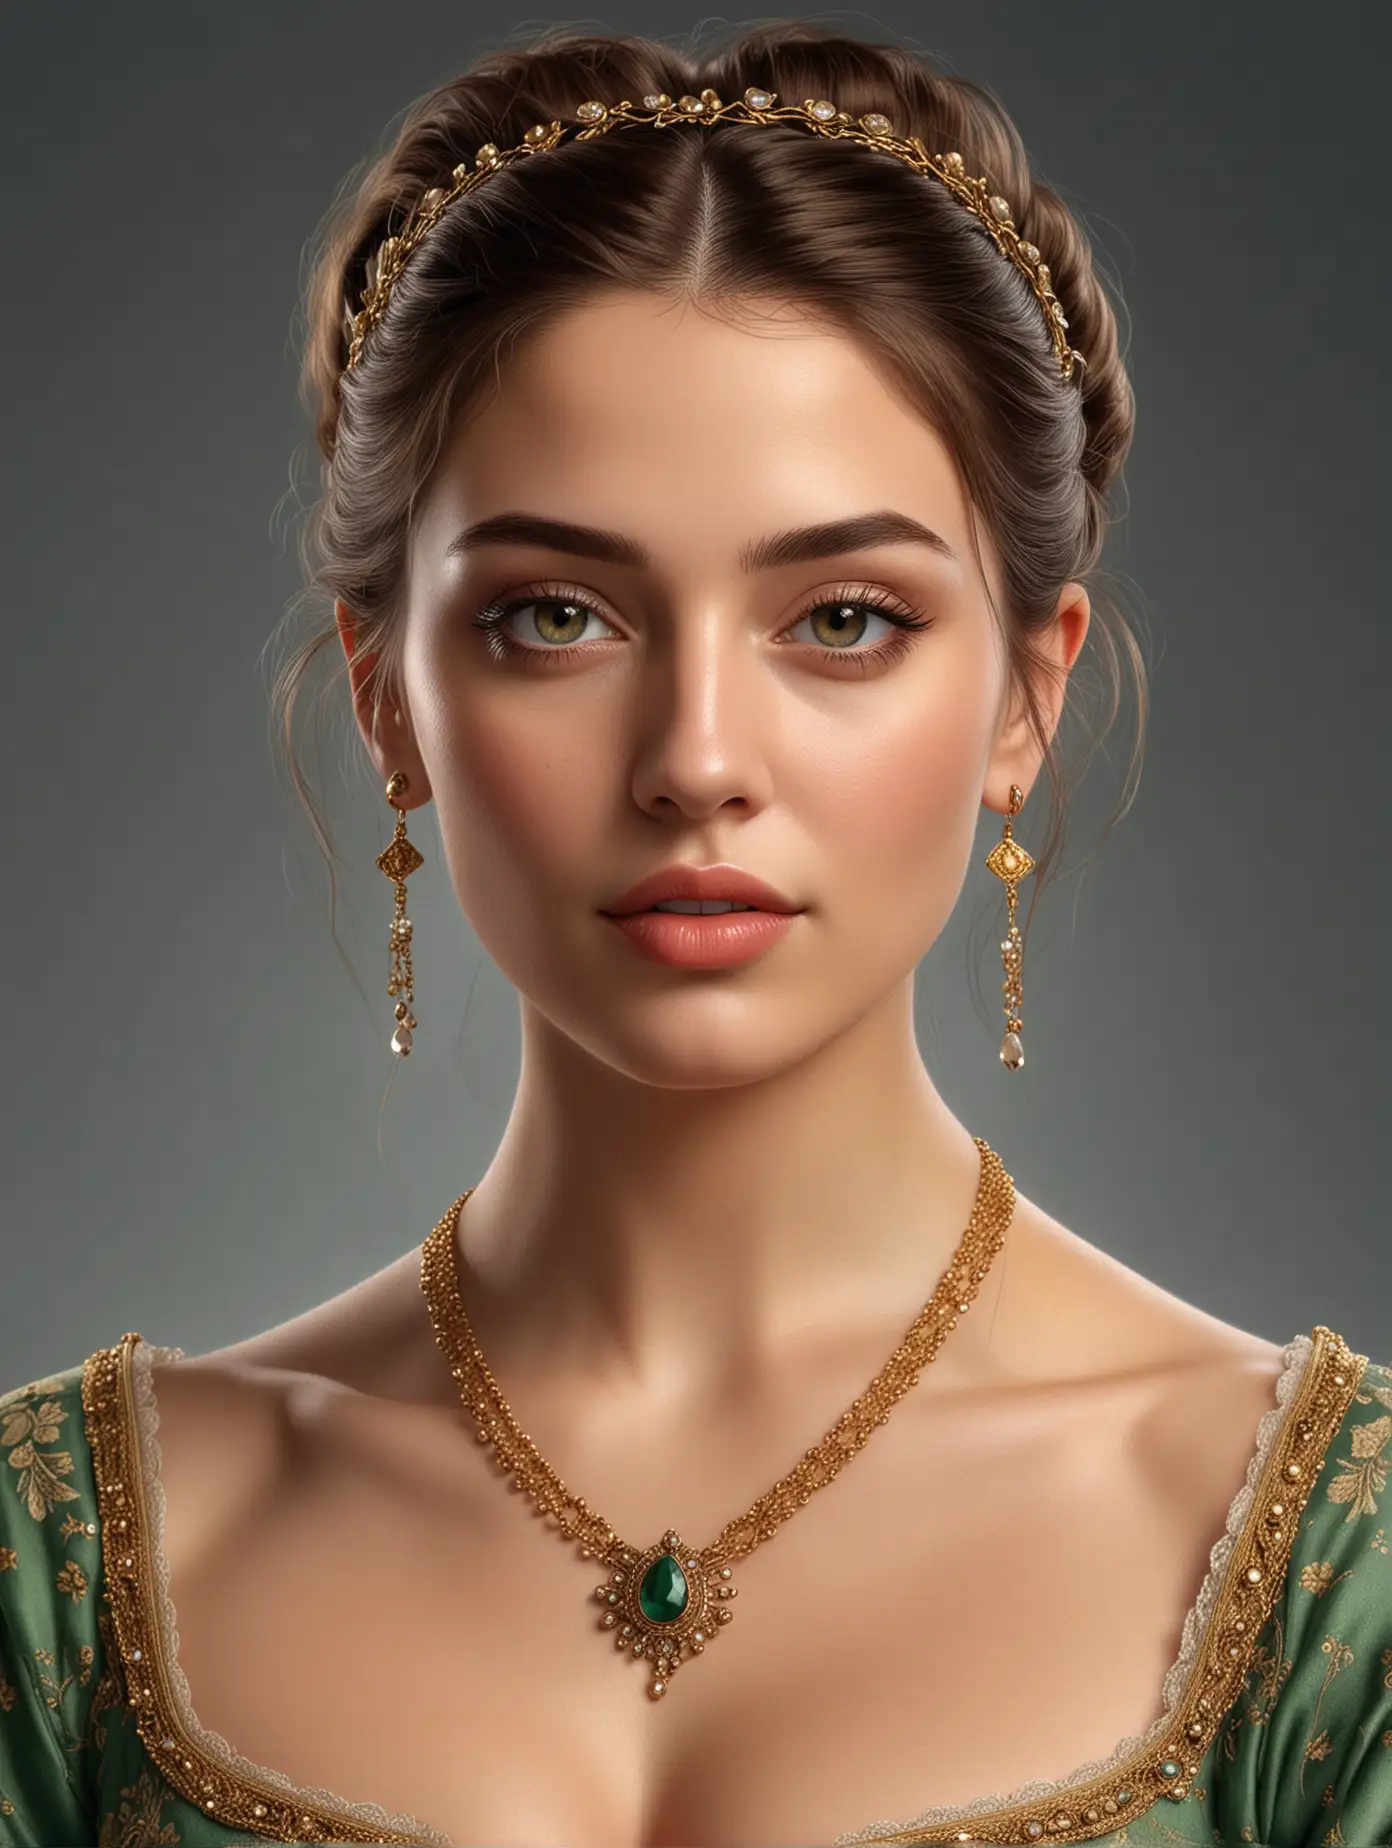 Hyperrealistic Portrait of Elegant Woman in Renaissance Dress with Golden Accessories